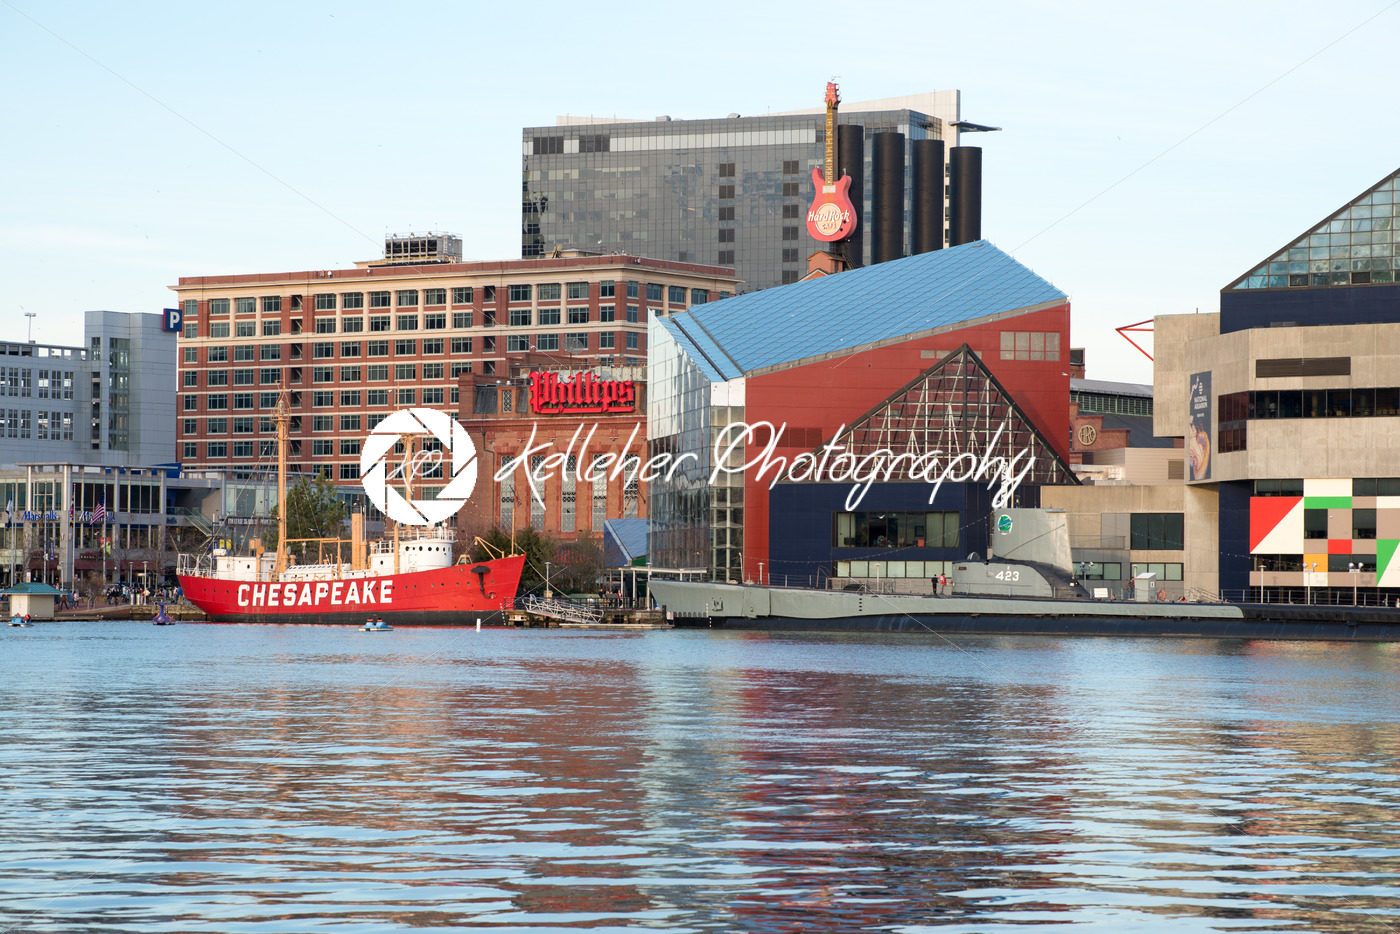 BALTIMORE, MARYLAND – FEBRUARY 18: The Inner Harbor in Baltimore, Maryland, USA on February 18, 2017 - Kelleher Photography Store